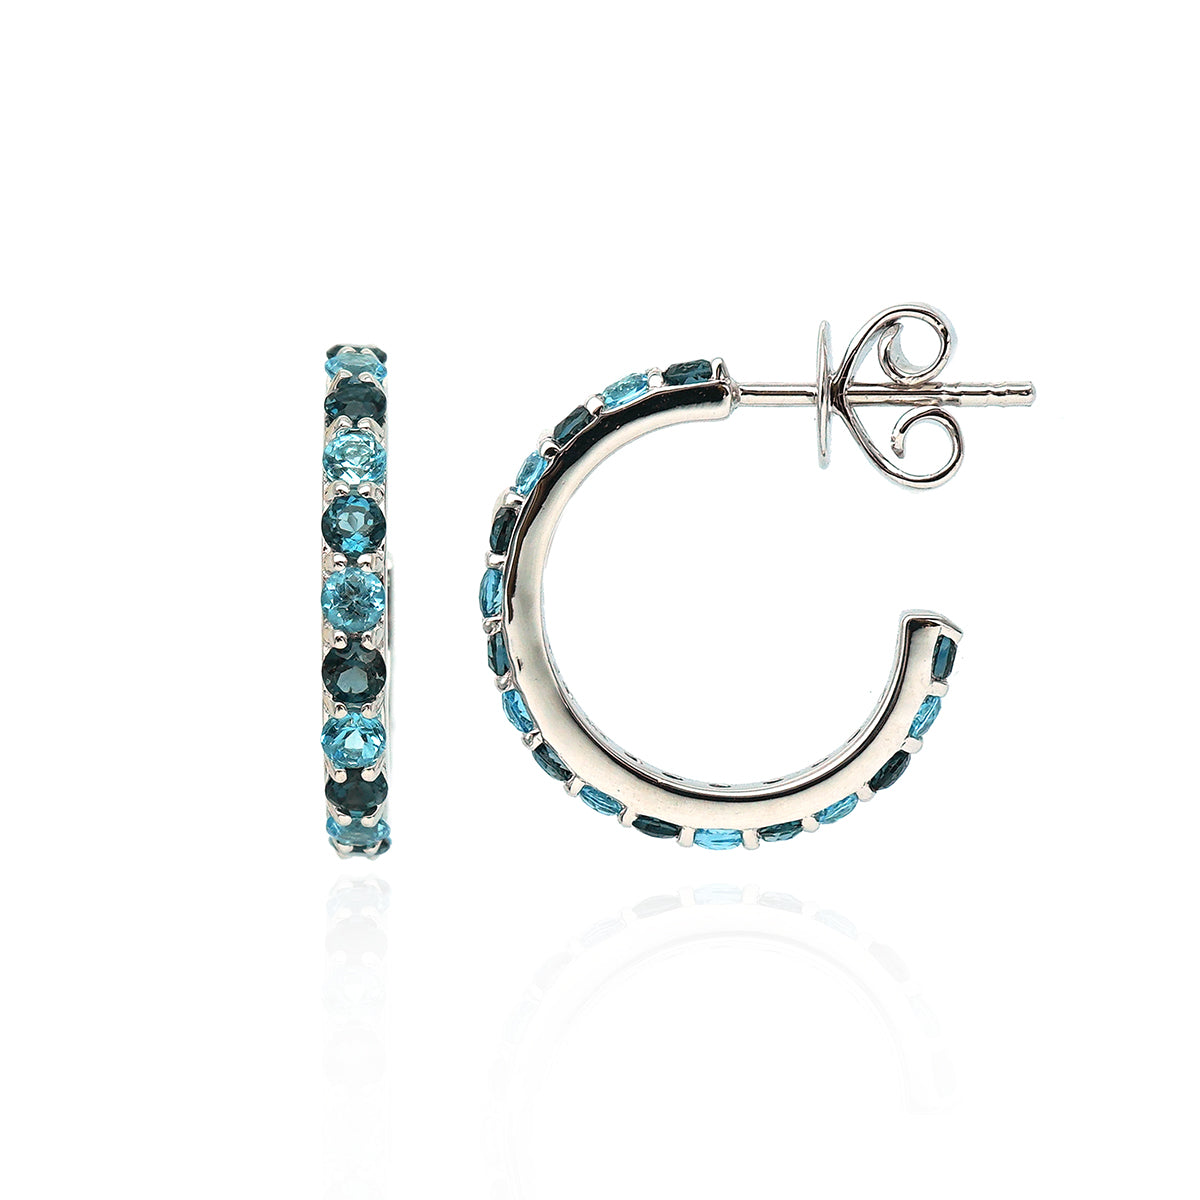 Sky Blue and London Blue Topaz mini hoop earrings, rhodium plated 925 sterling silver.